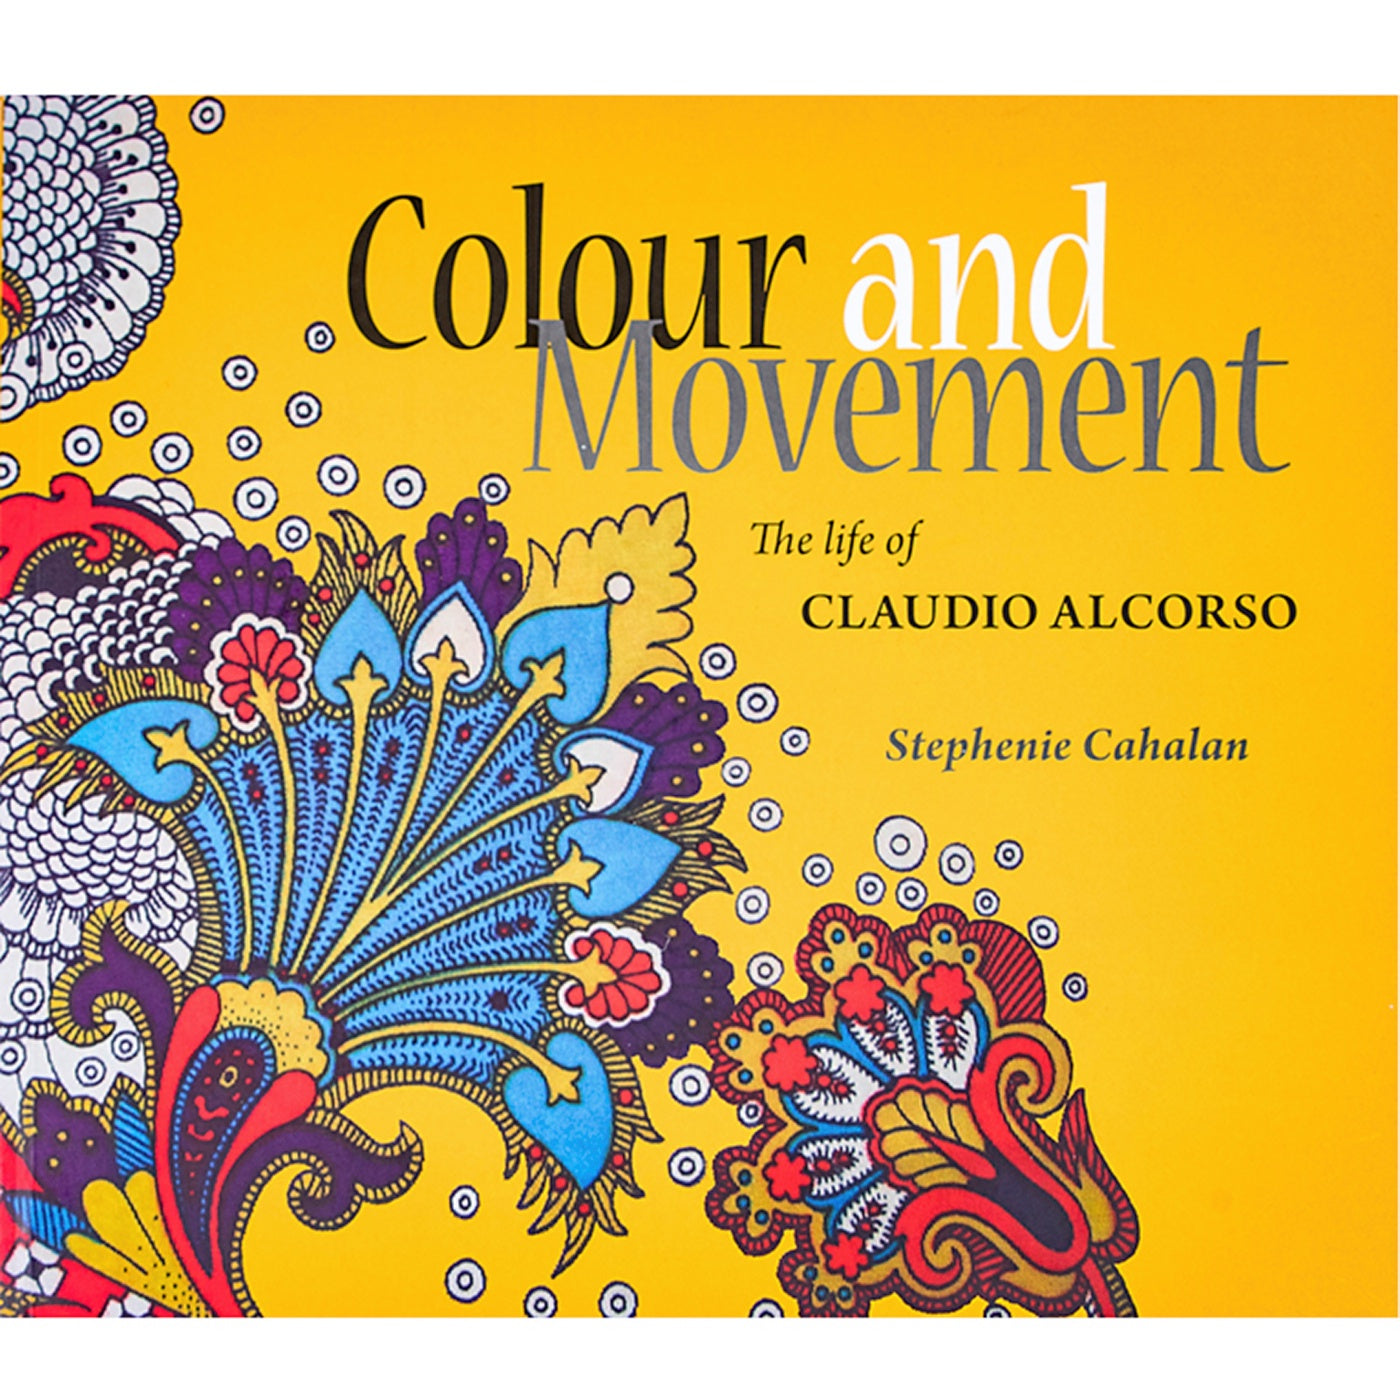 Colour and Movement, The Life of Claudio Alcorso